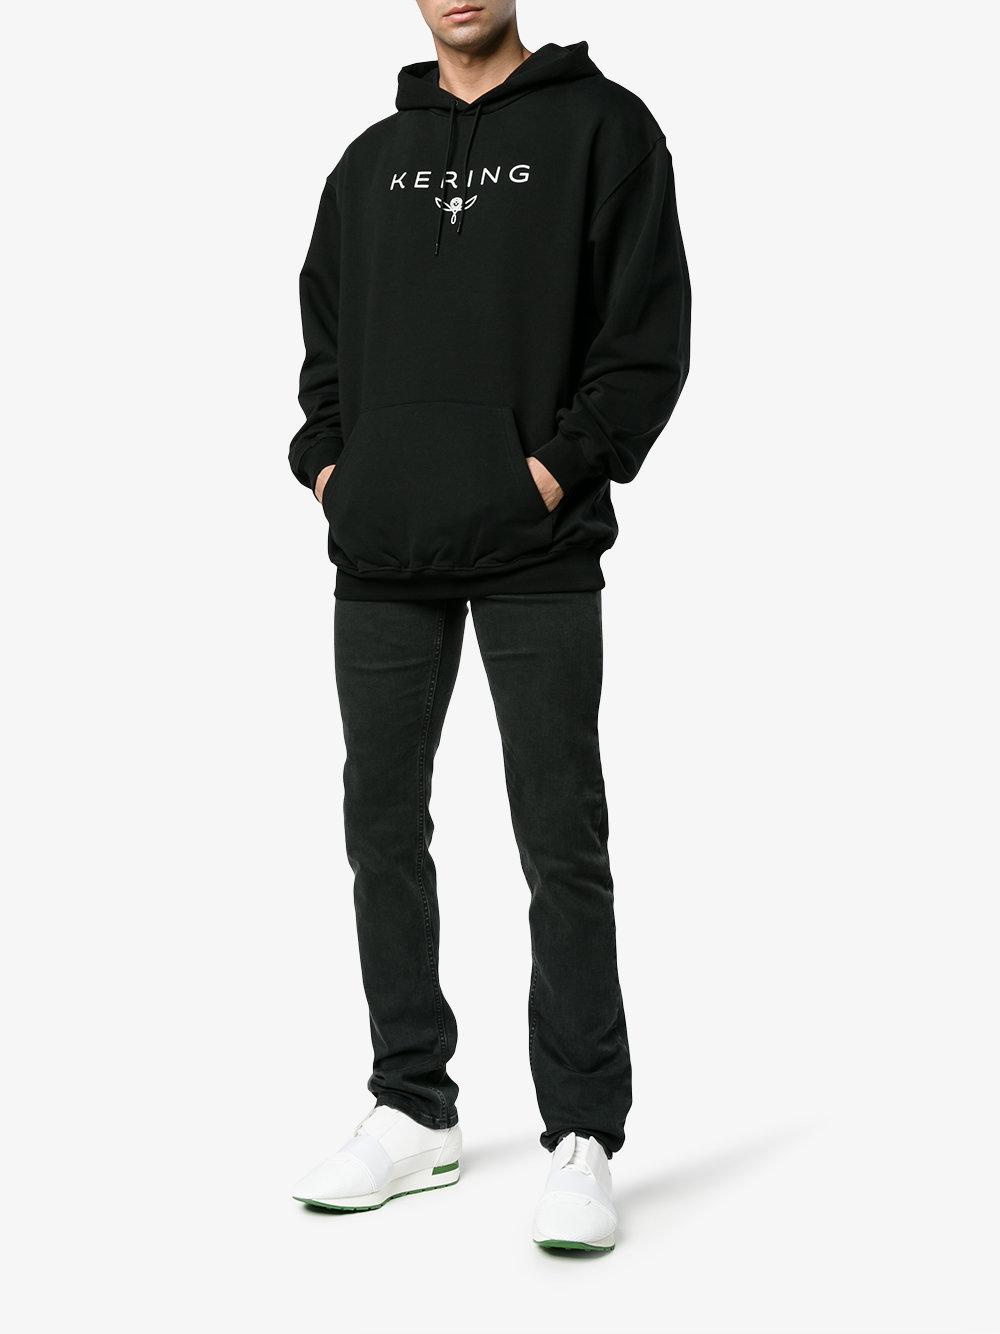 Balenciaga Cotton Kering Logo Hoodie in Black for Men - Lyst